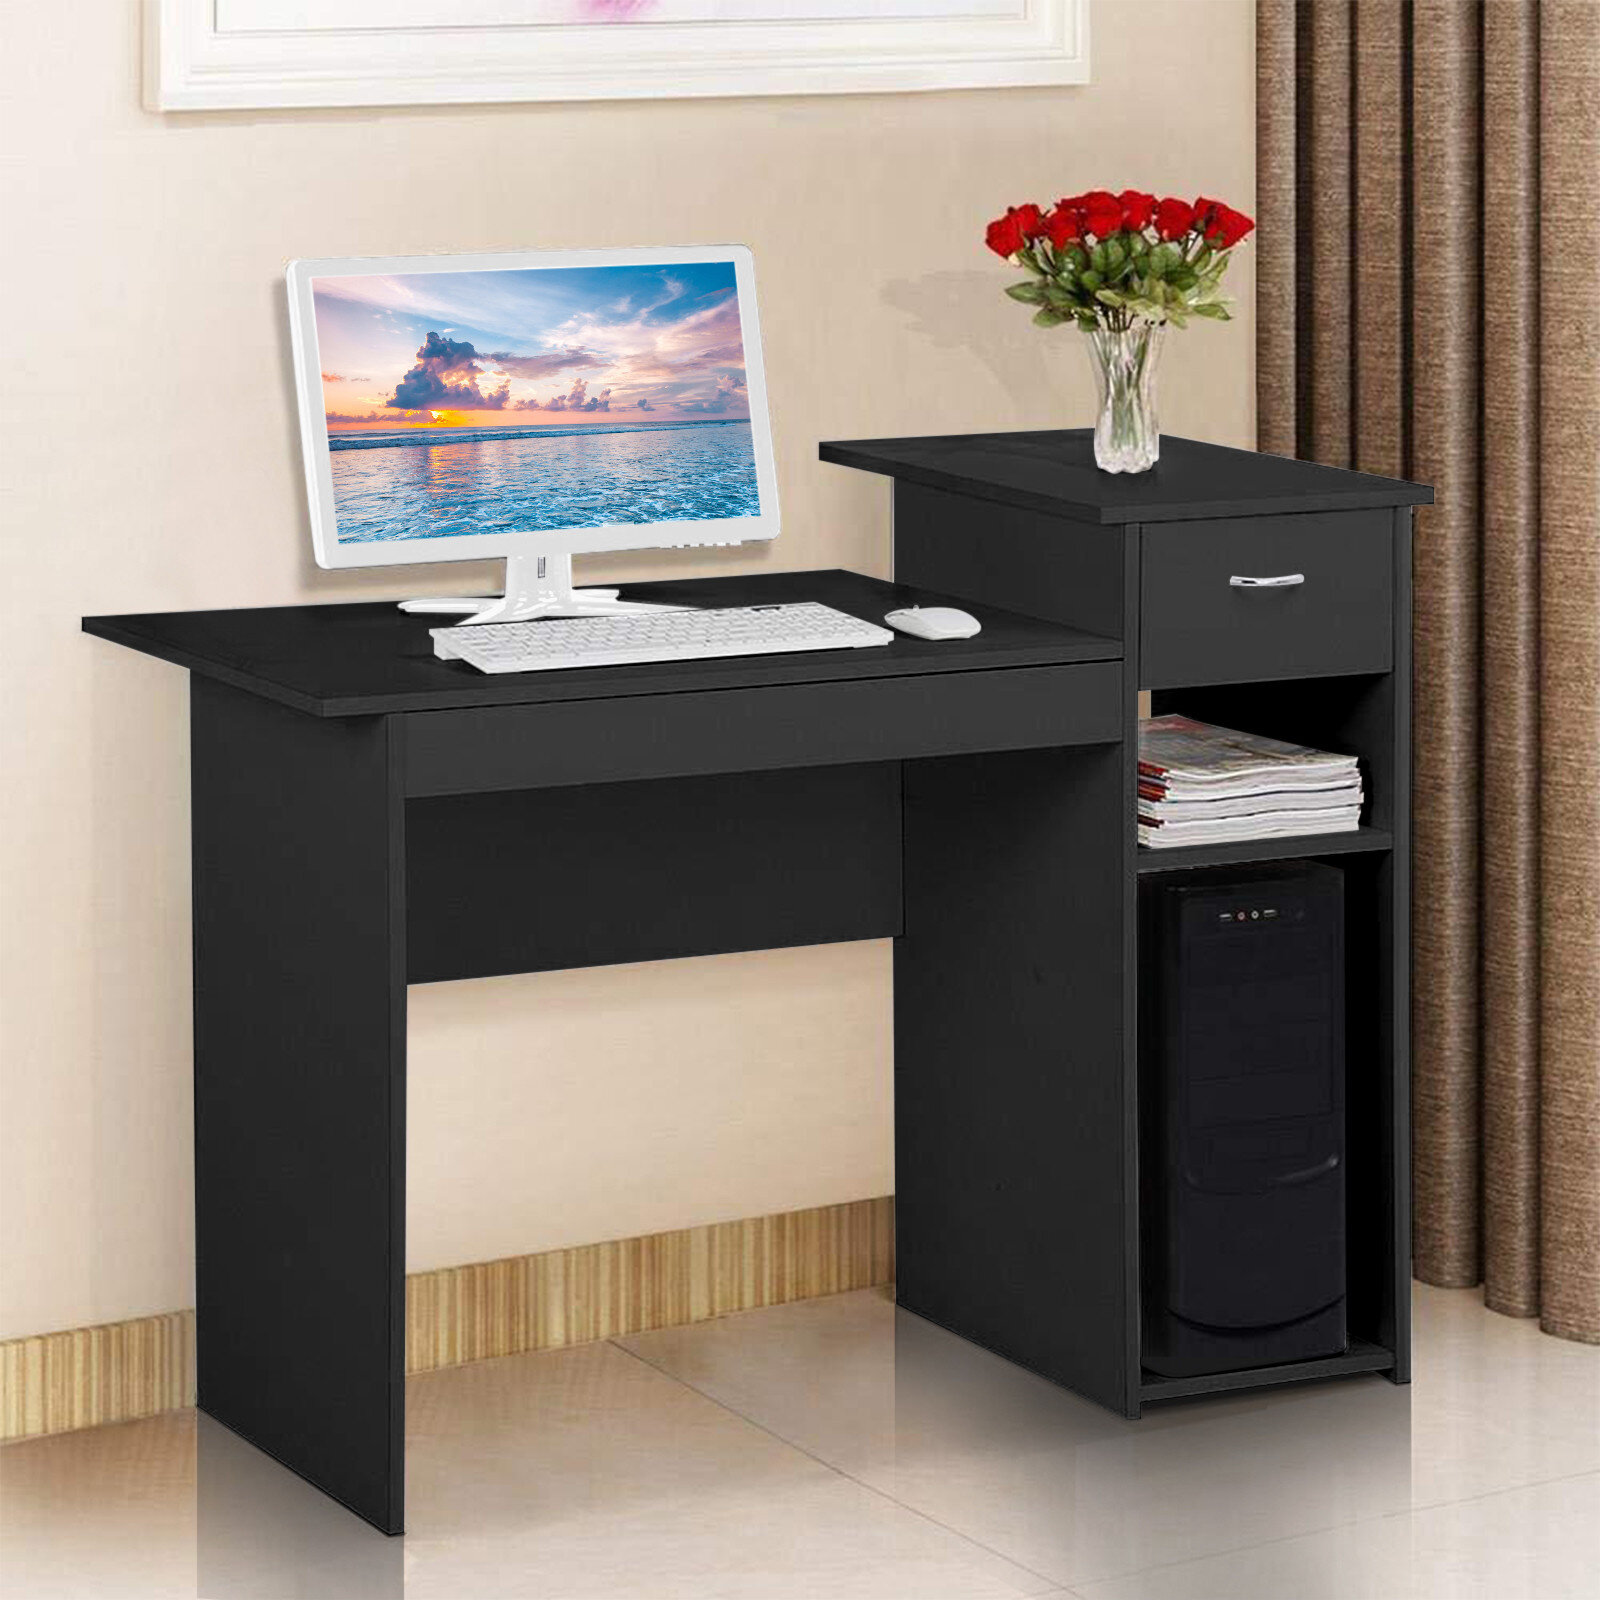 Details about   Wood Computer Desk PC Laptop Table Study Workstation Home Office Furniture Black